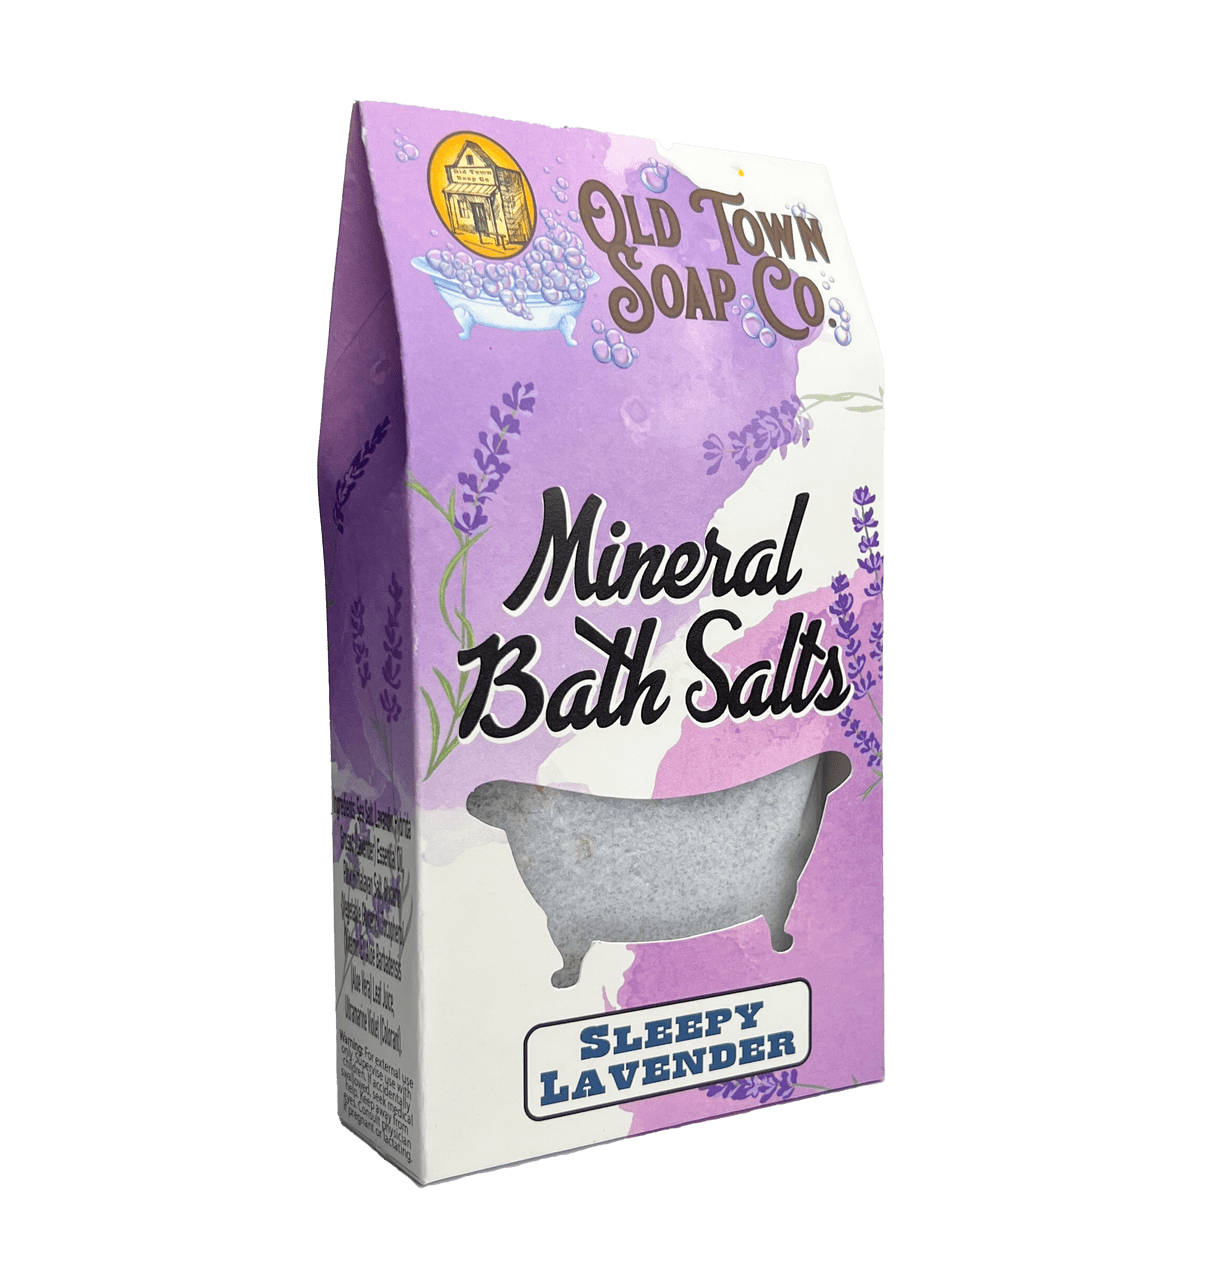 Sleepy Lavender Bath Salts - Old Town Soap Co.